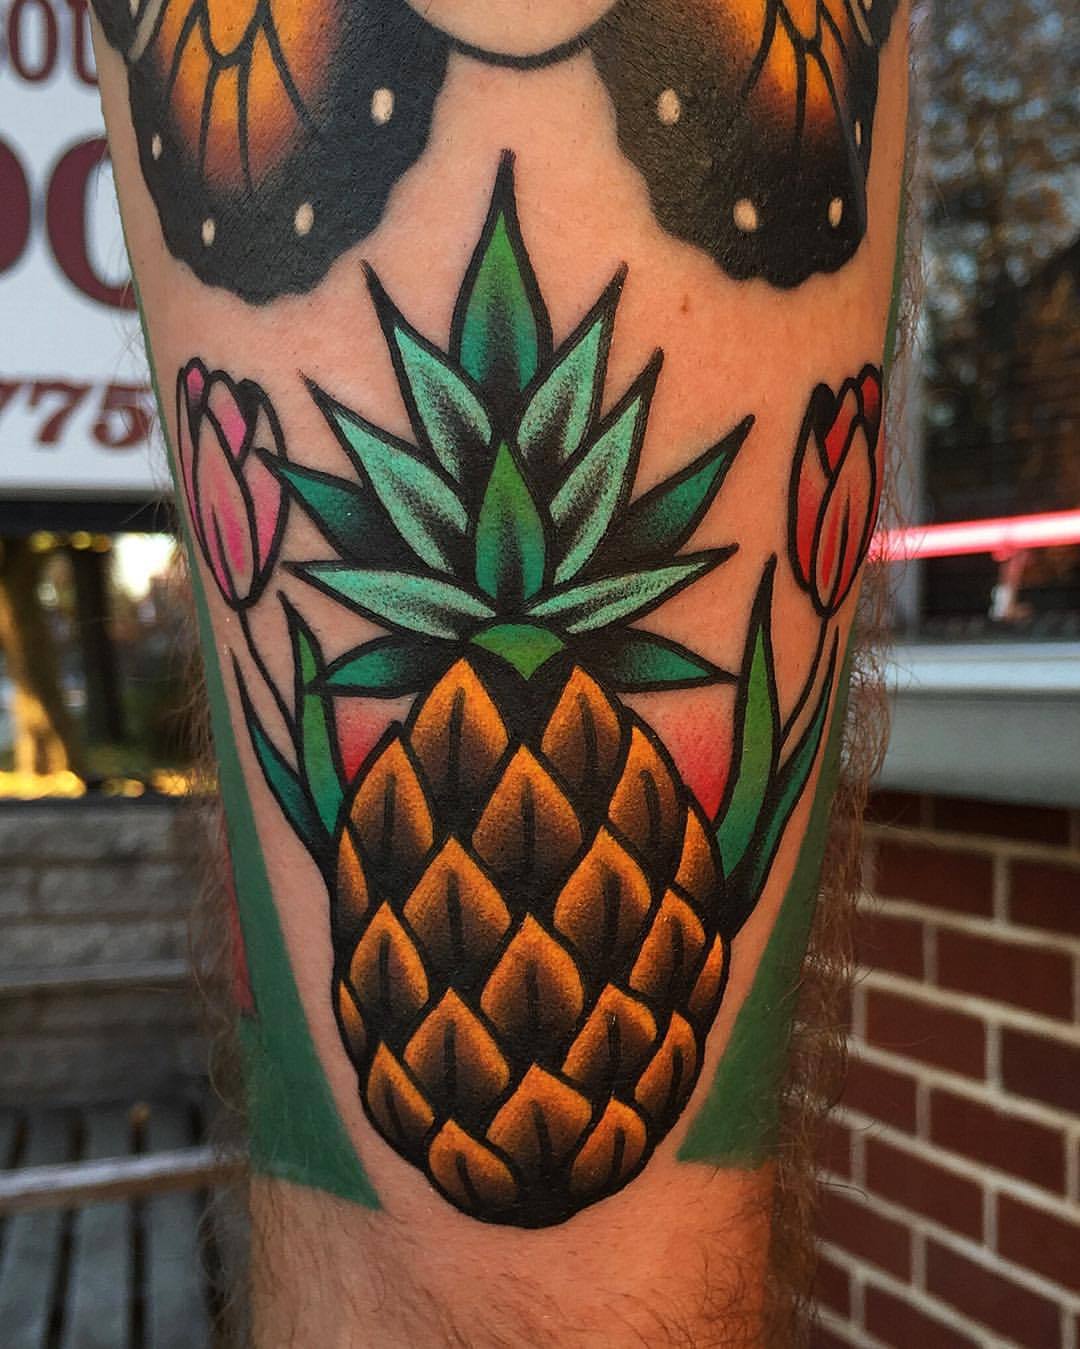 Pineapple and plumeria tattoo  by Matt  Maui Tattoo Artist at MidPacific  Tattoo  MidPacific Tattoo